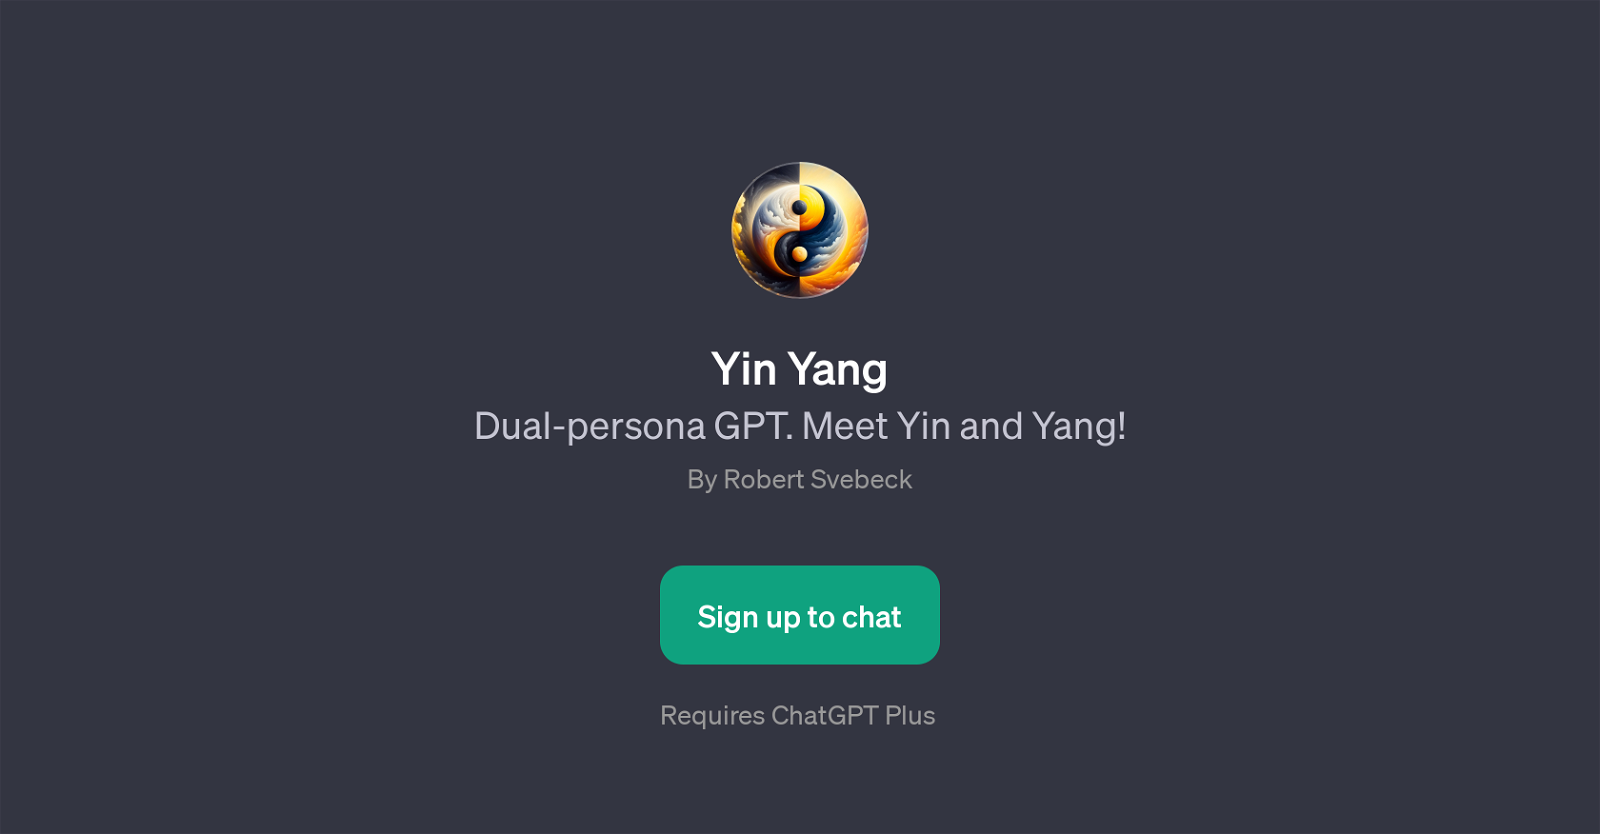 Yin Yang website